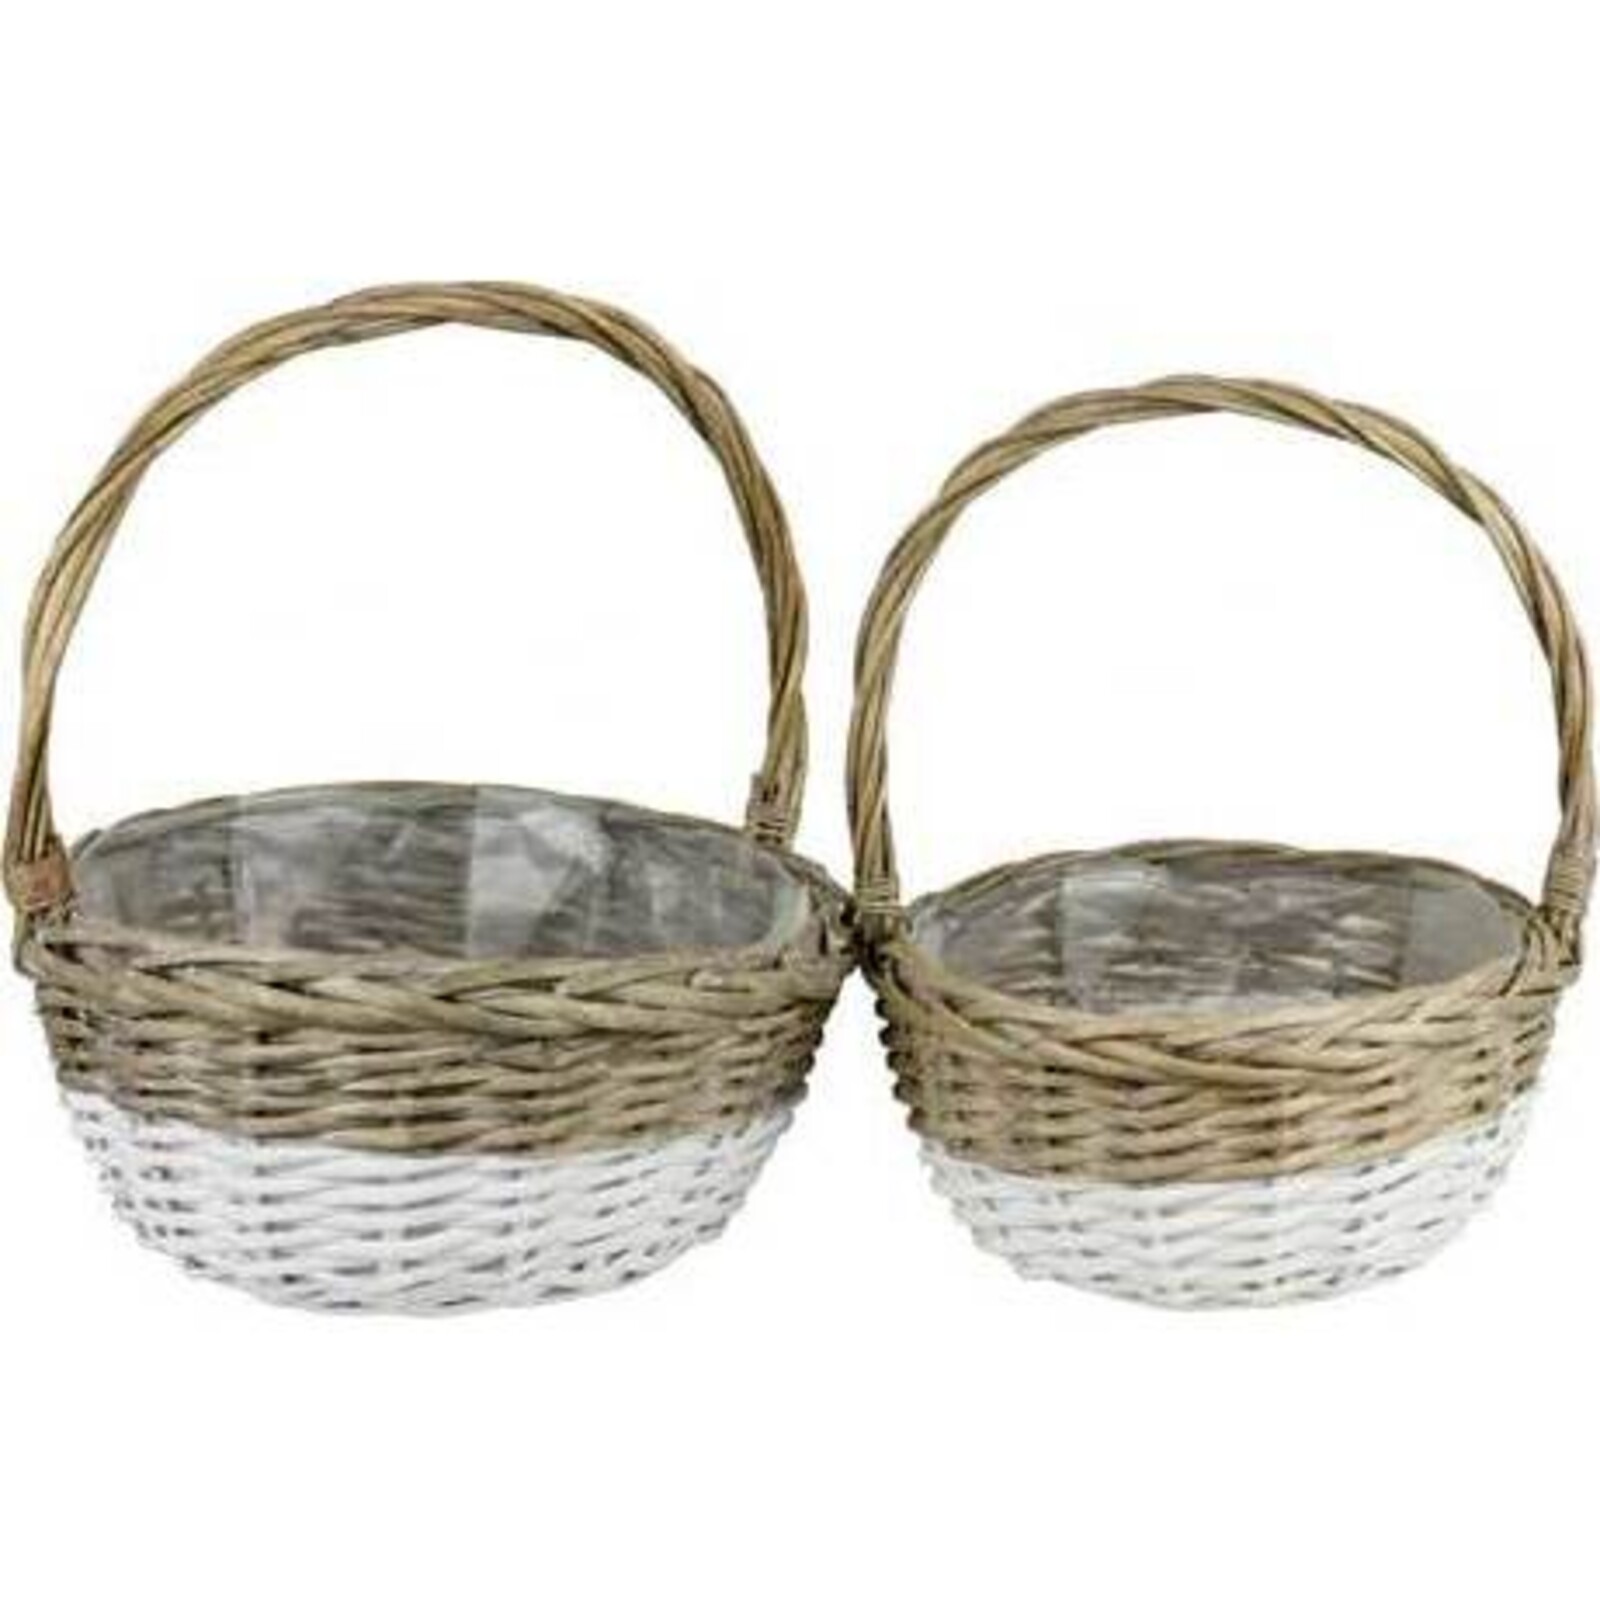 Baskets Salice Handle S/2